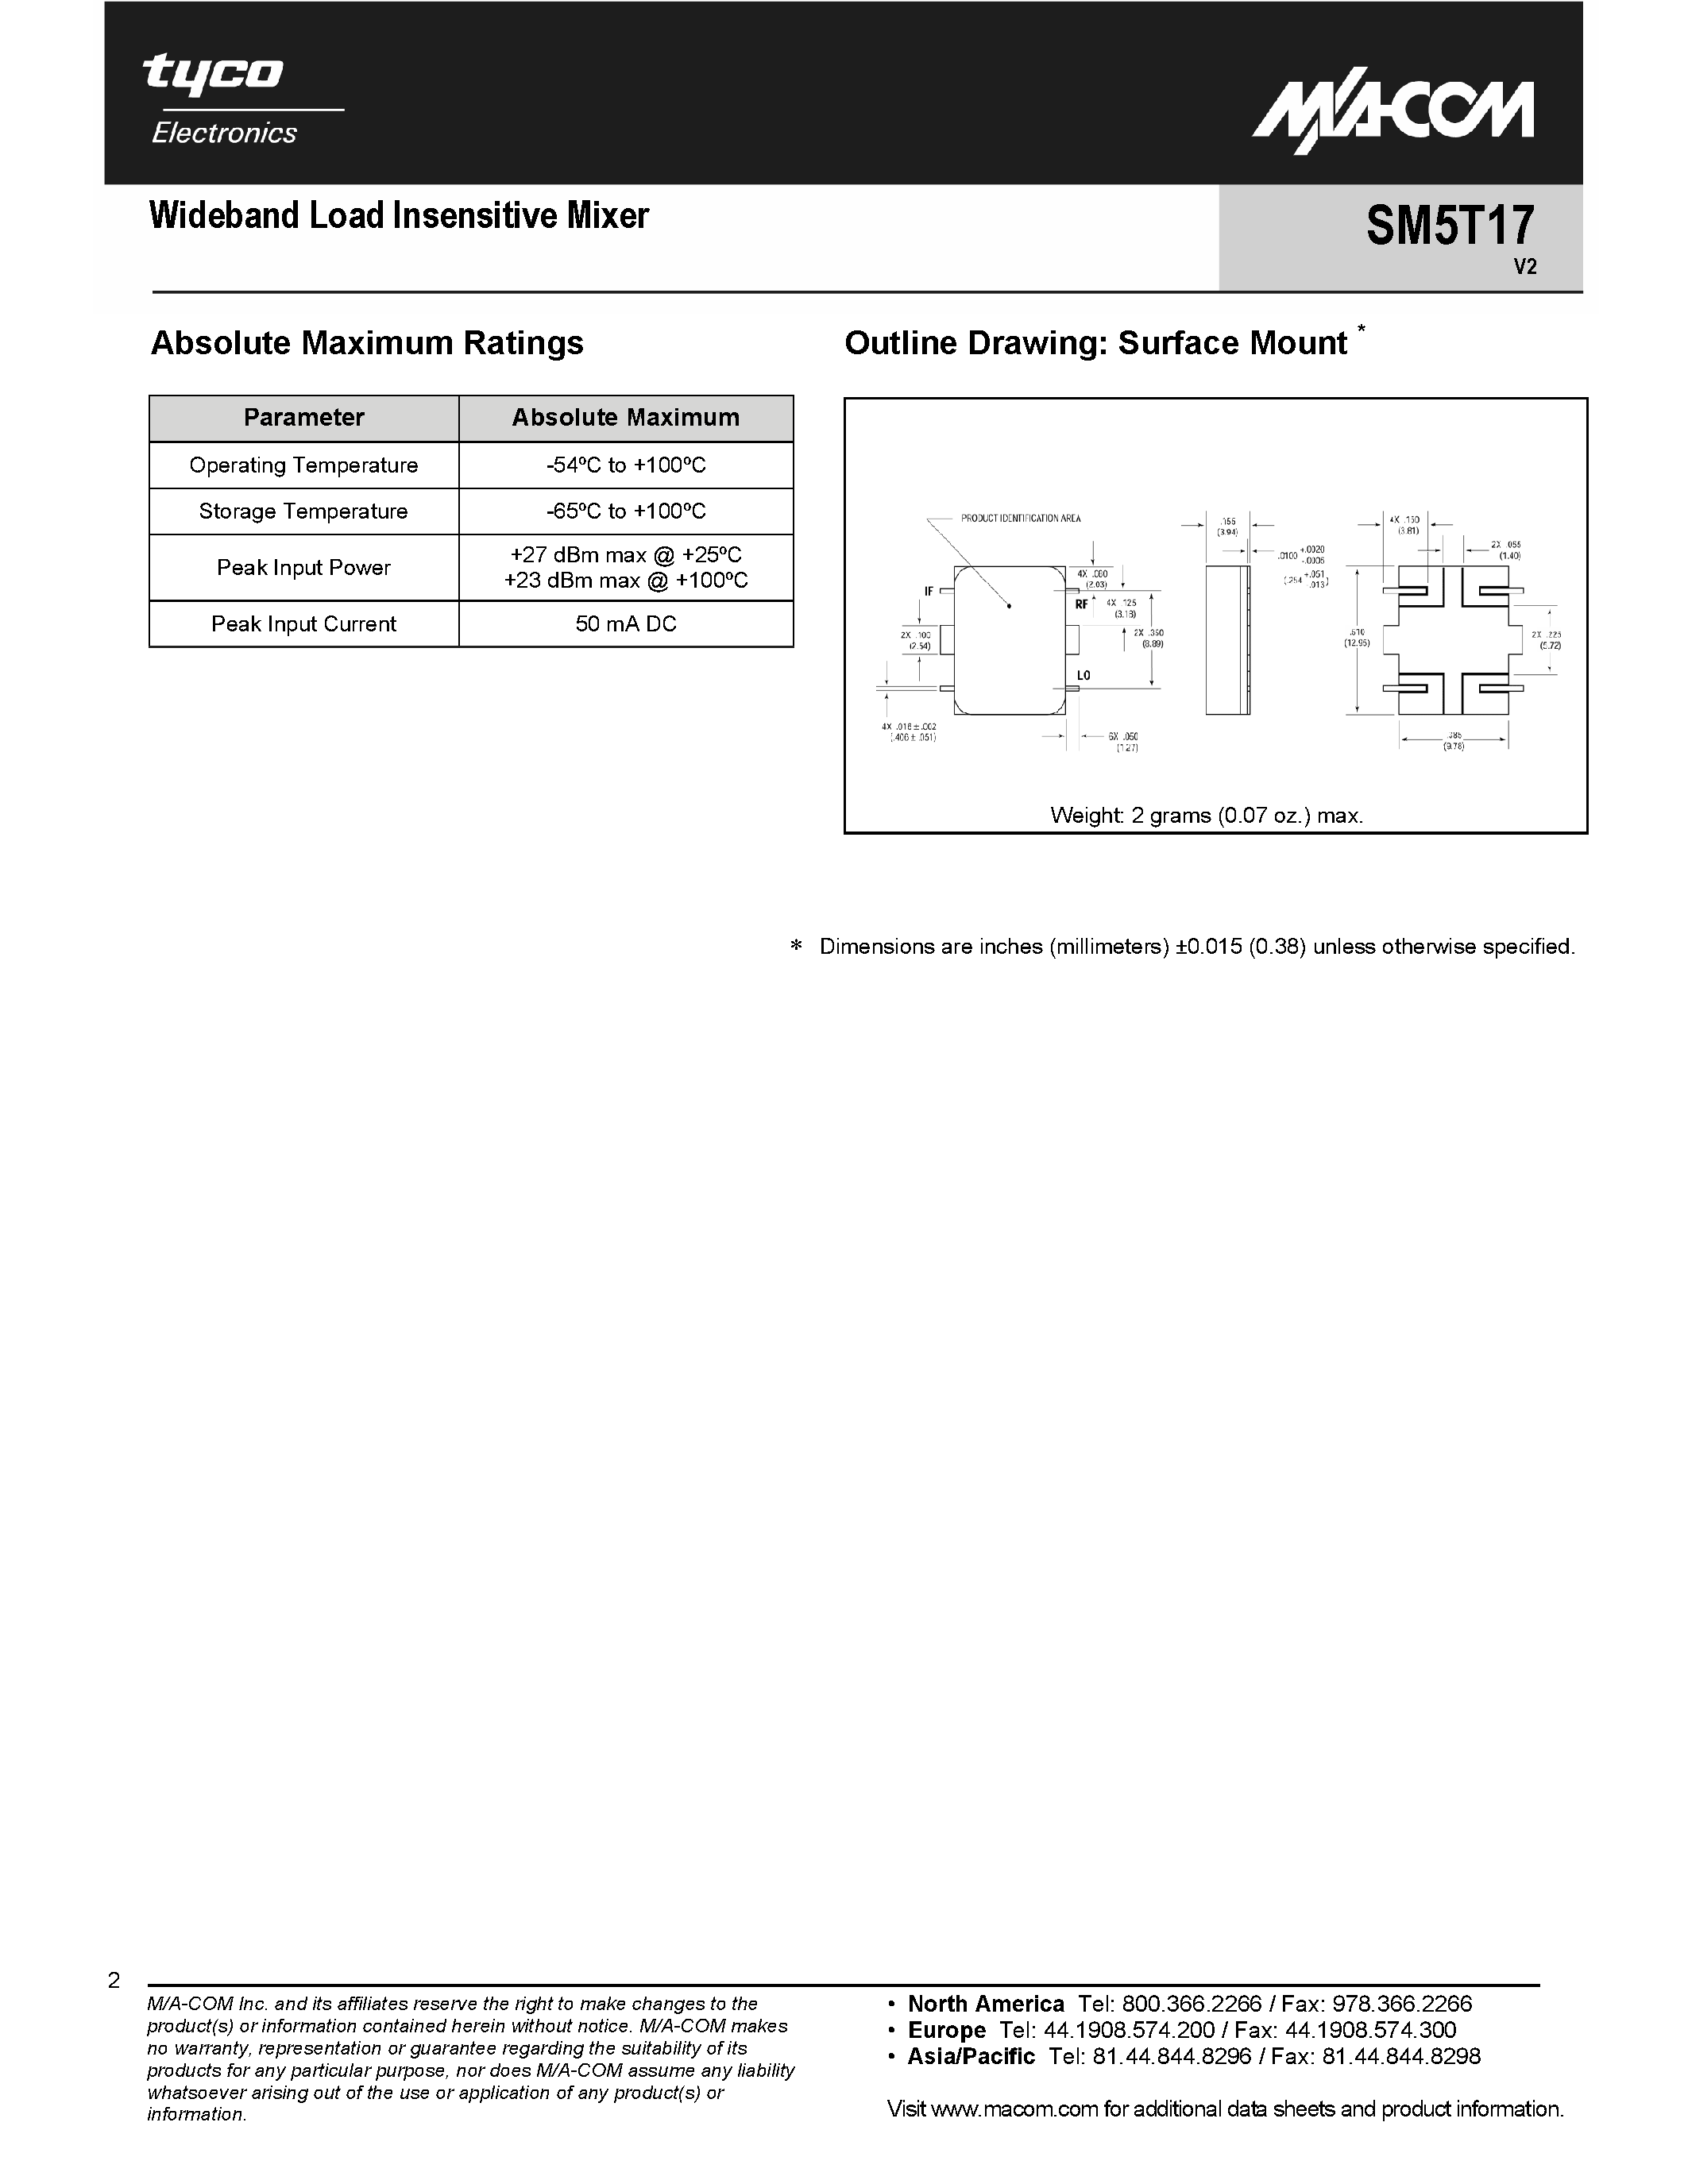 Datasheet SM5T17 - Wideband Load Insensitive Mixer page 2